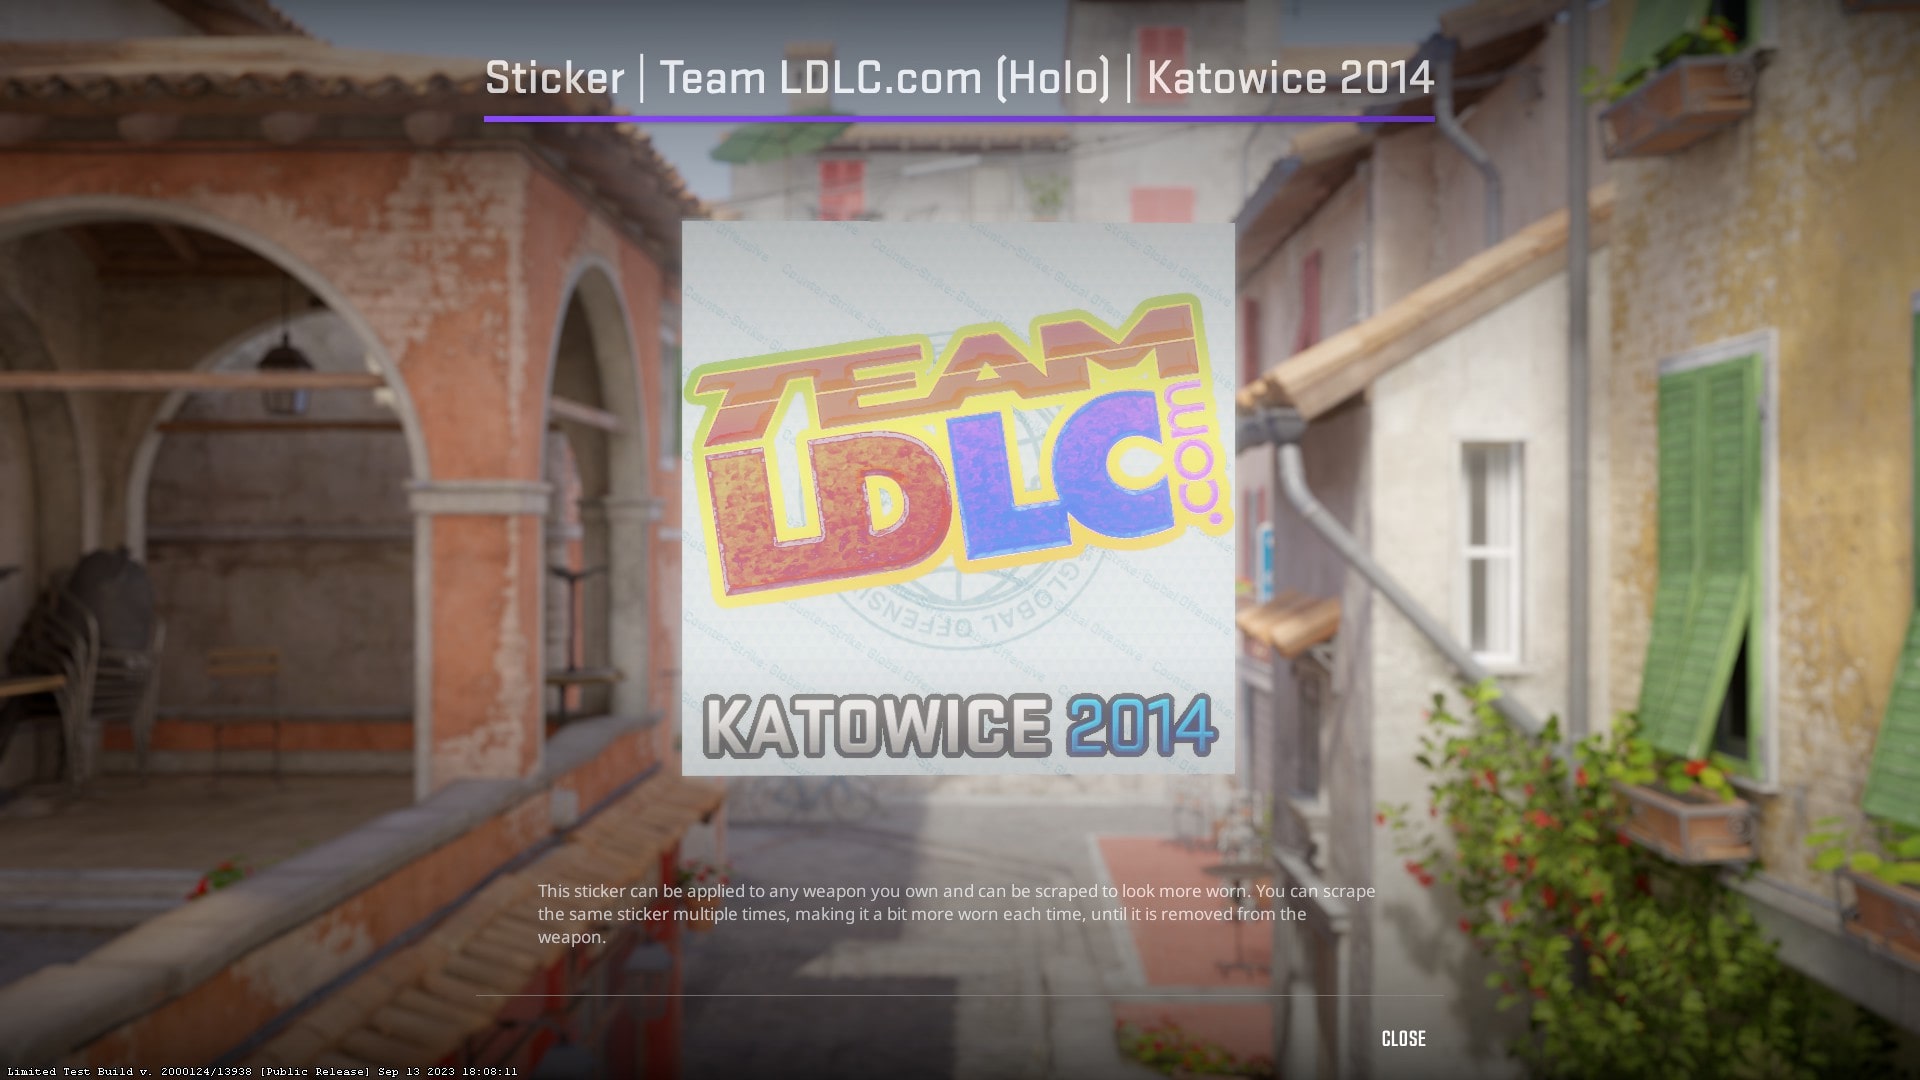 Sticker Team LDLC.com (Holo) Katowice 2014 Current Price